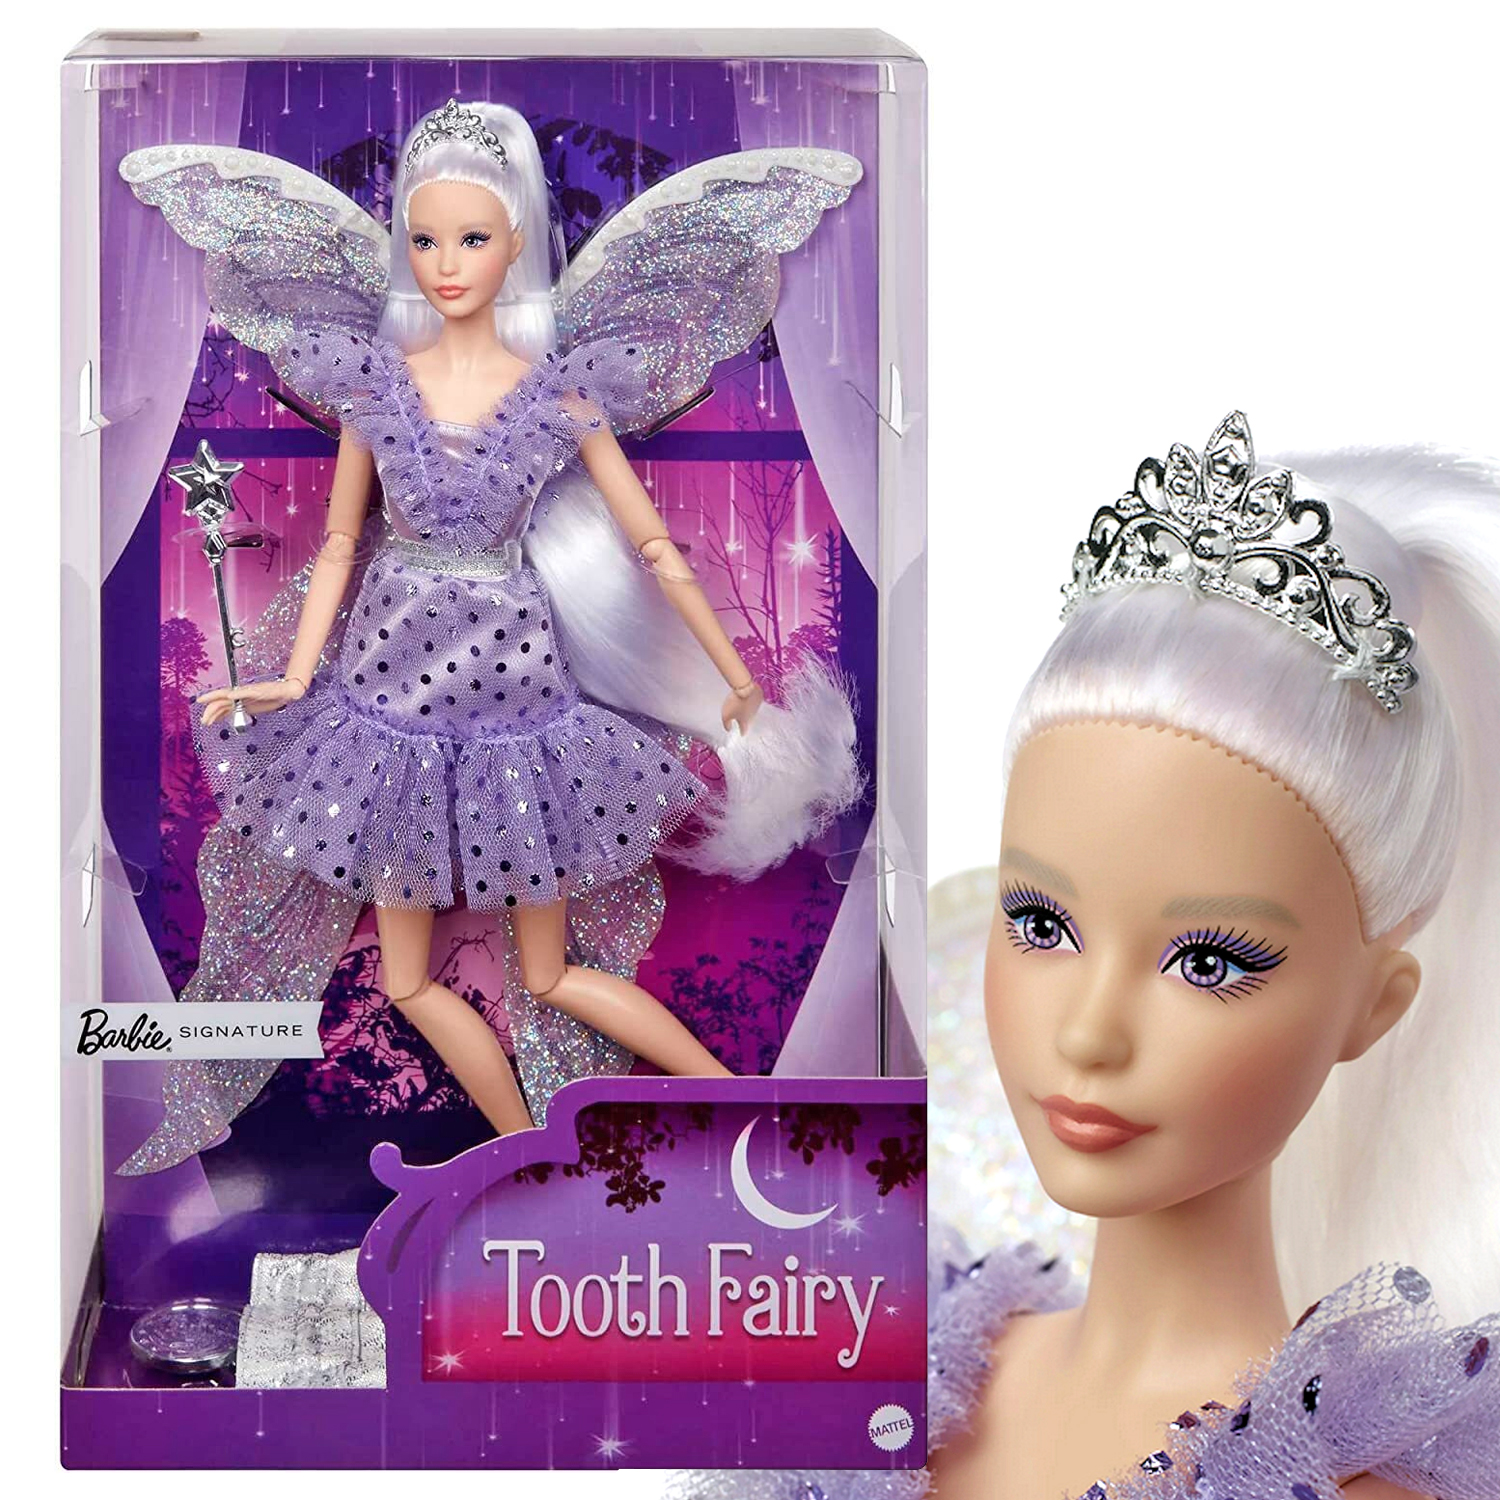 Кукла коллекционная Barbie Фея Barbie Signature Tooth Fairy кукла barbie bmr1959 блондинка коллекционная